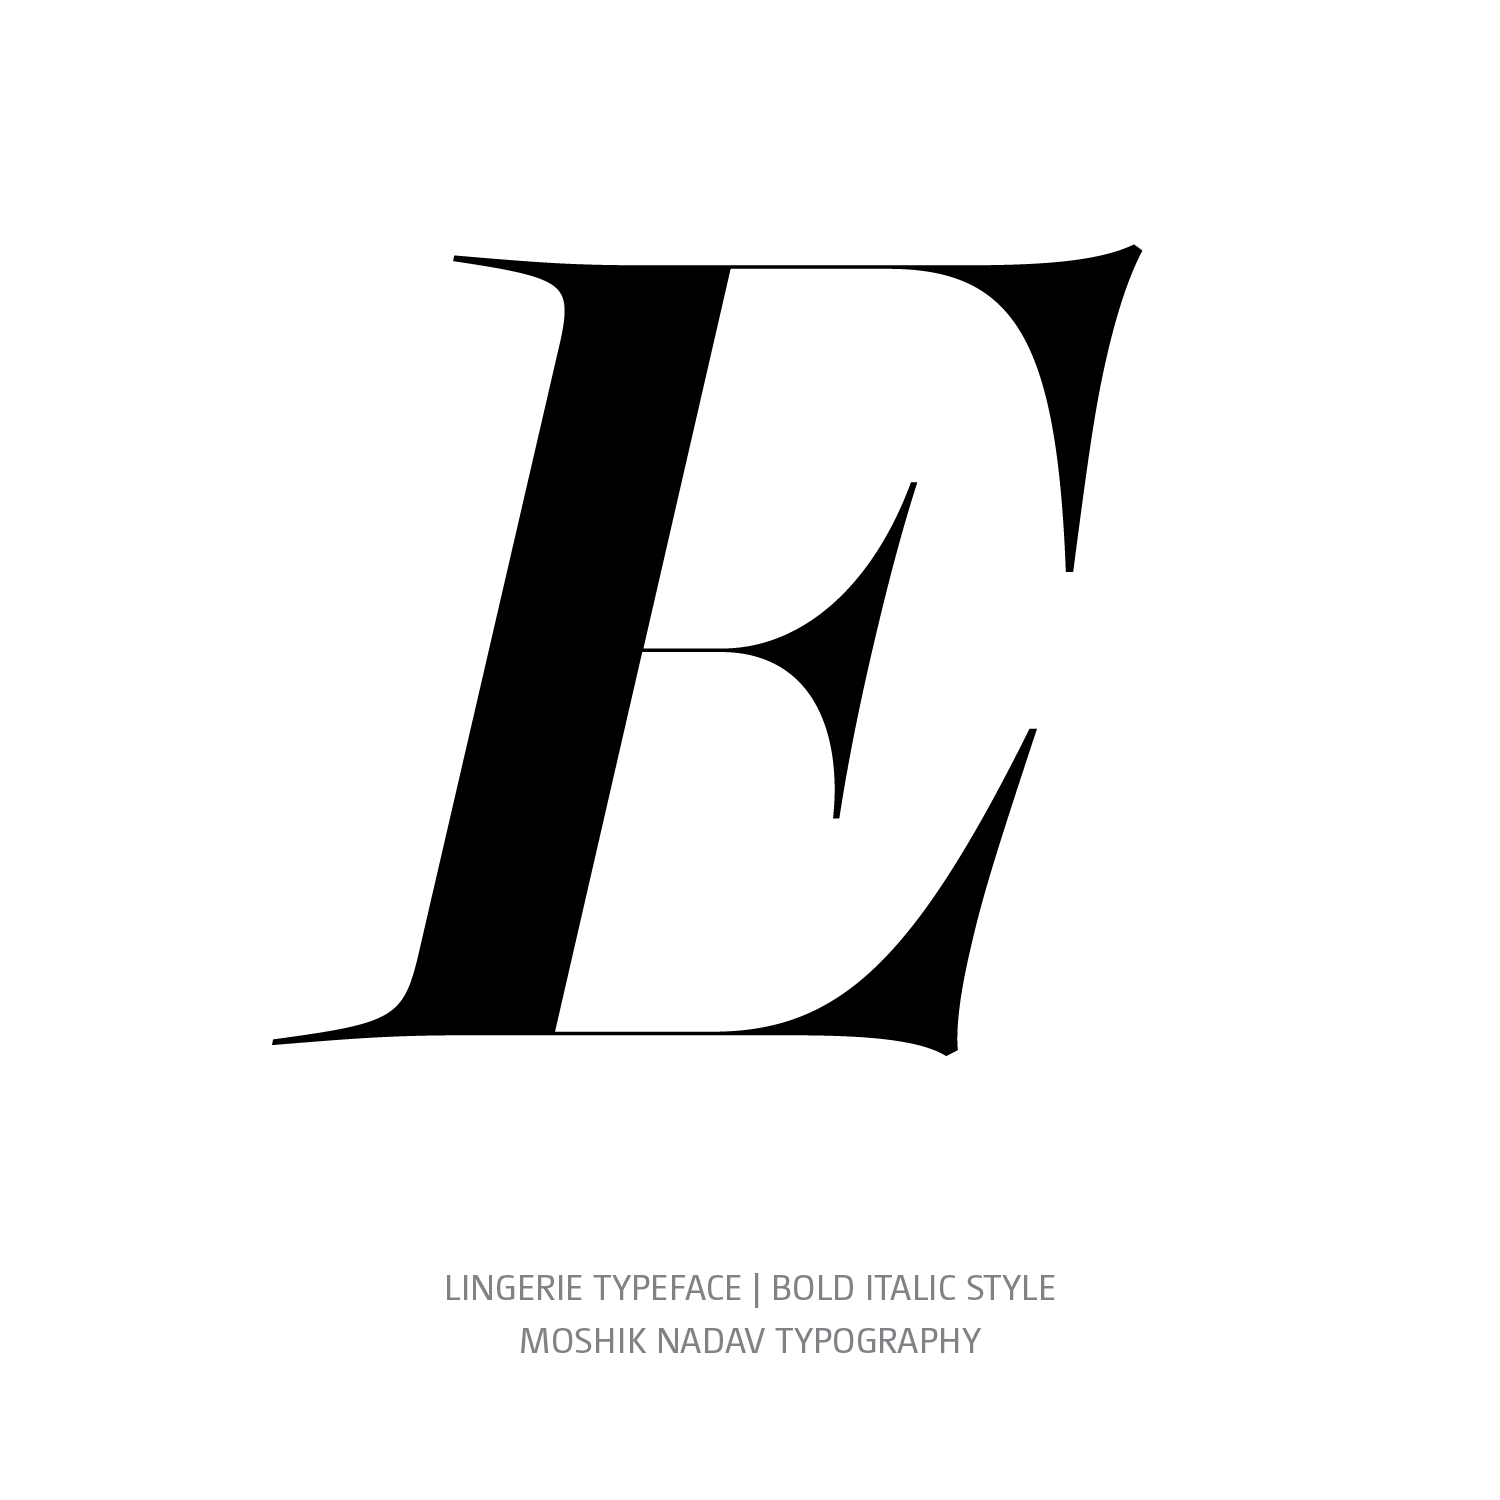 Lingerie Typeface Bold Italic E